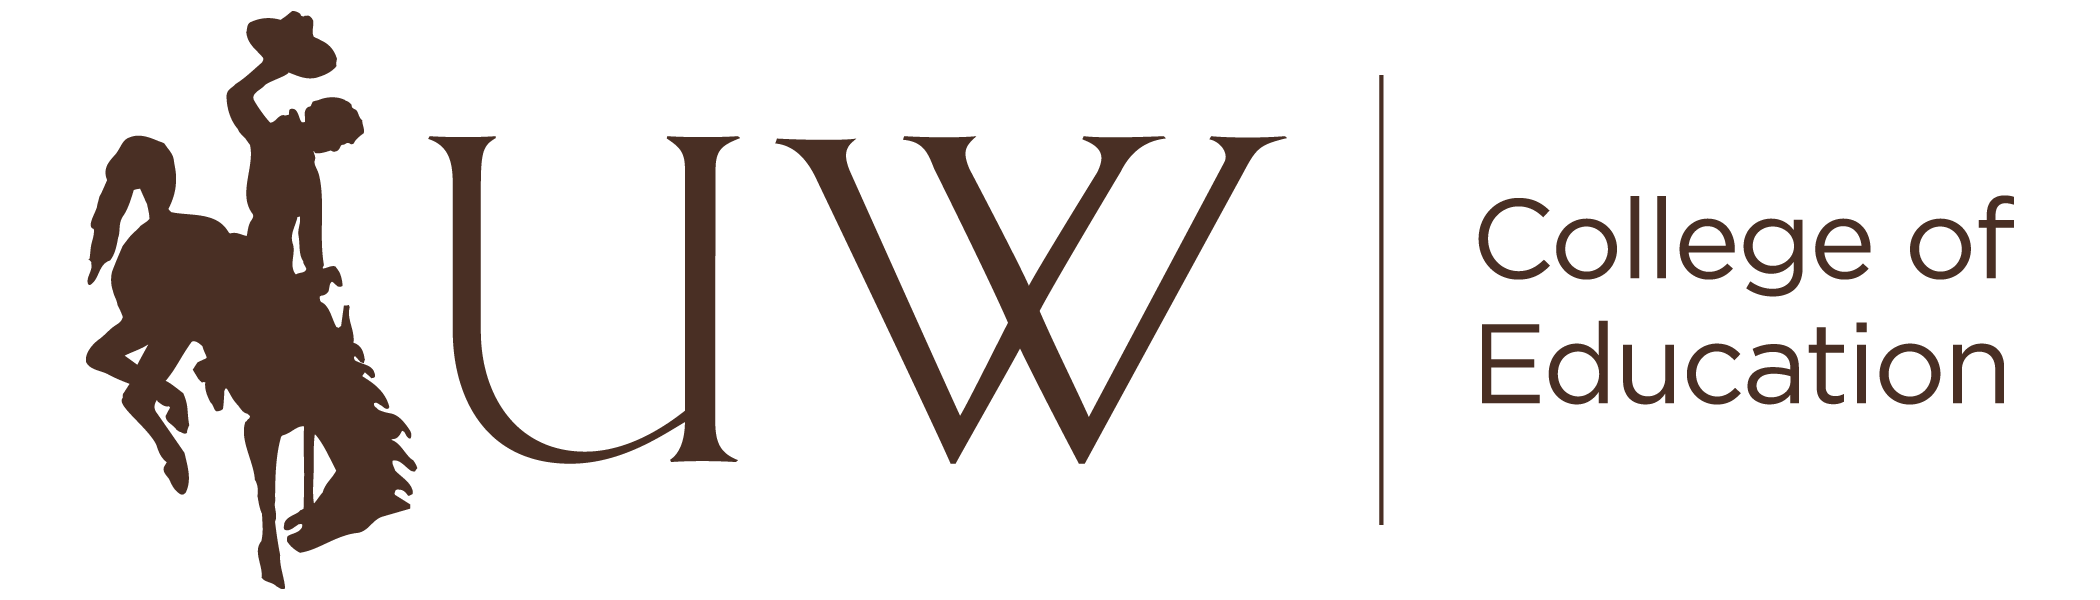 University of Wyoming College of Education logo